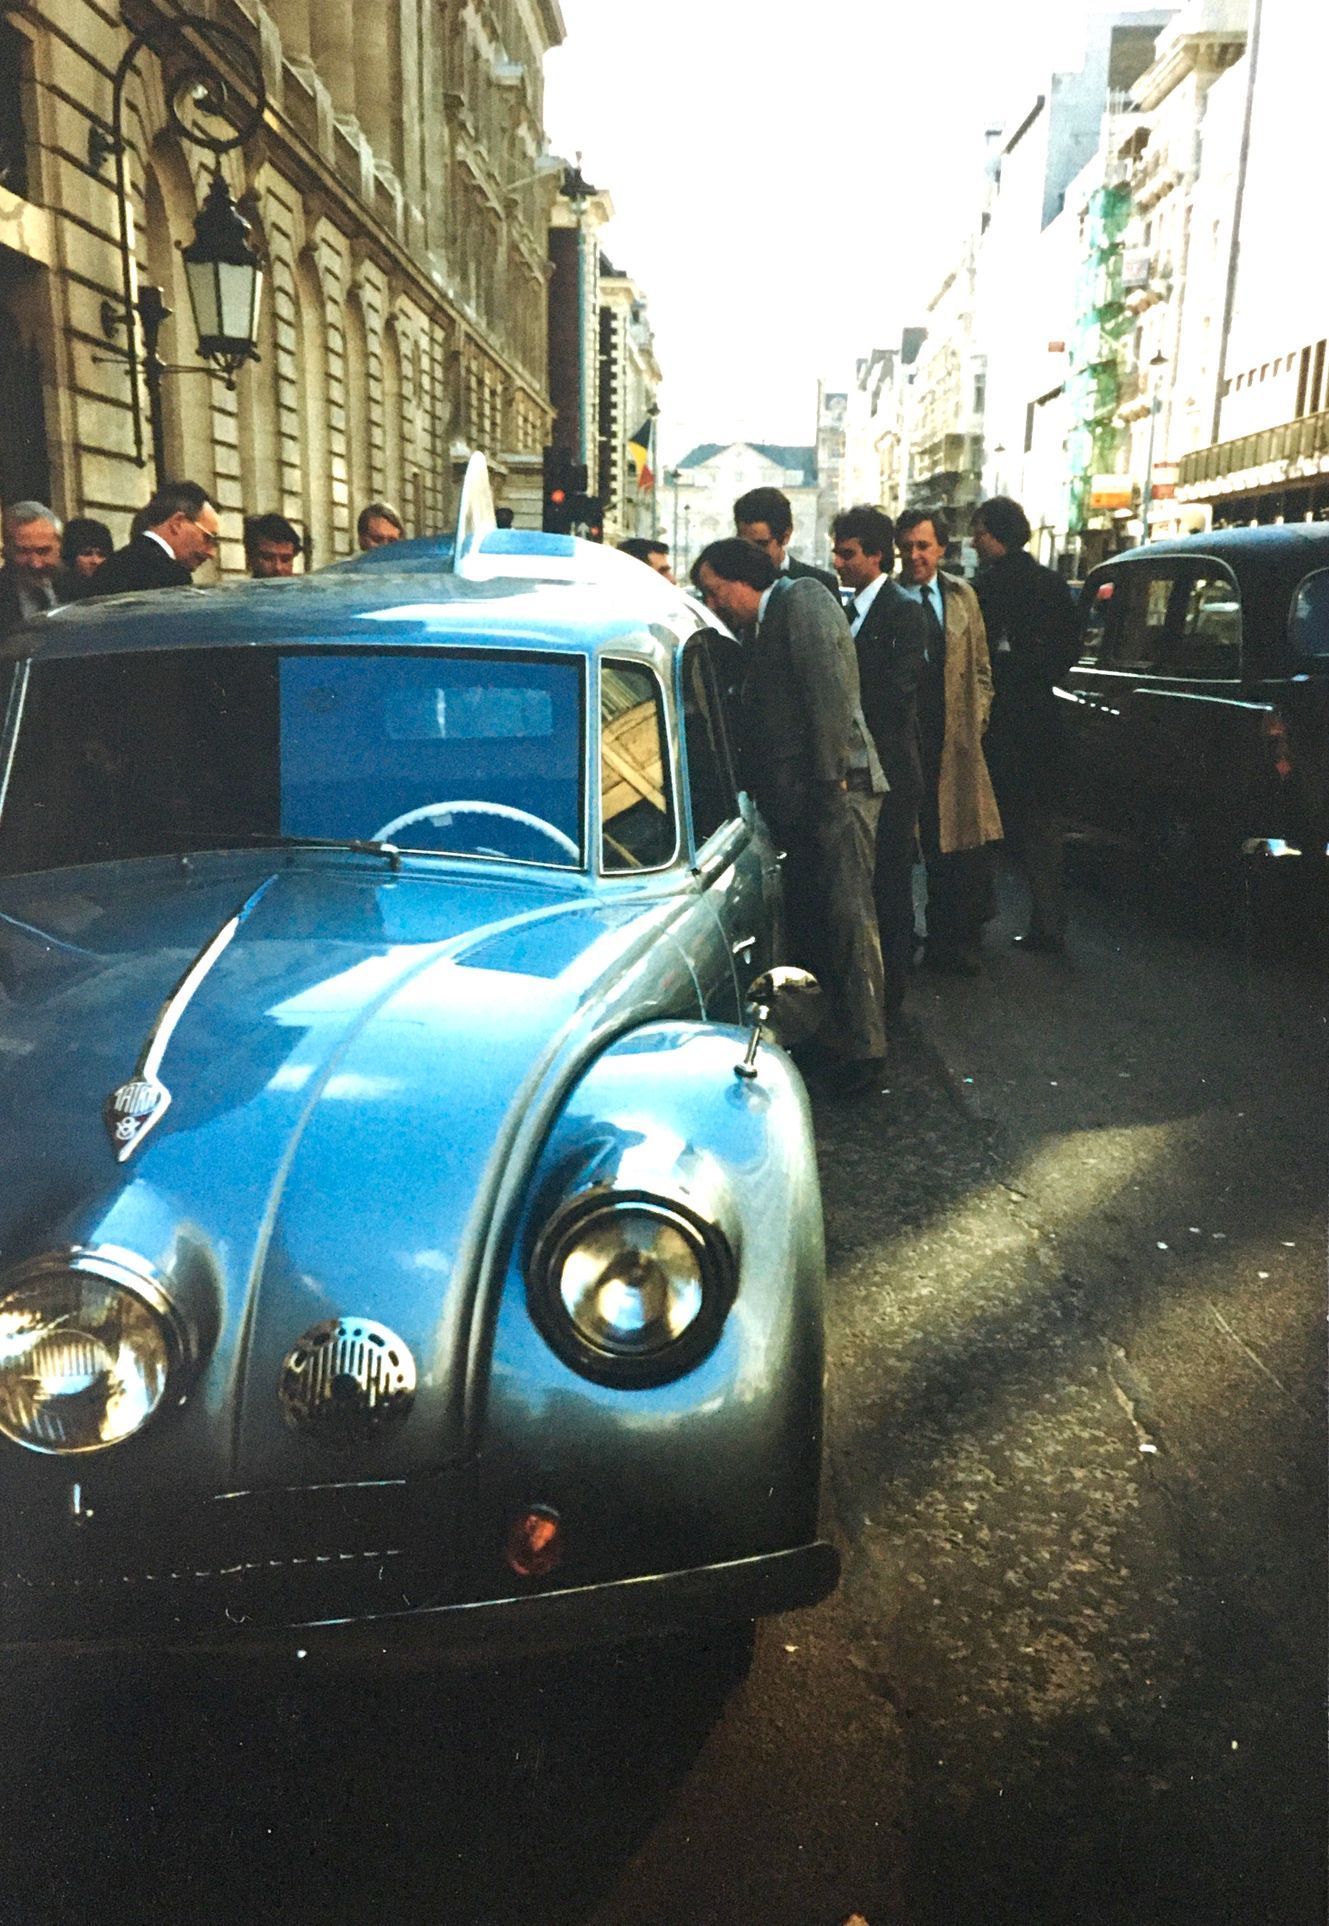 Tatra T87 pred Royal Automobile Club budove, Pall Mall, Londyn, kde jsme meli knizni krest v breznu 1990